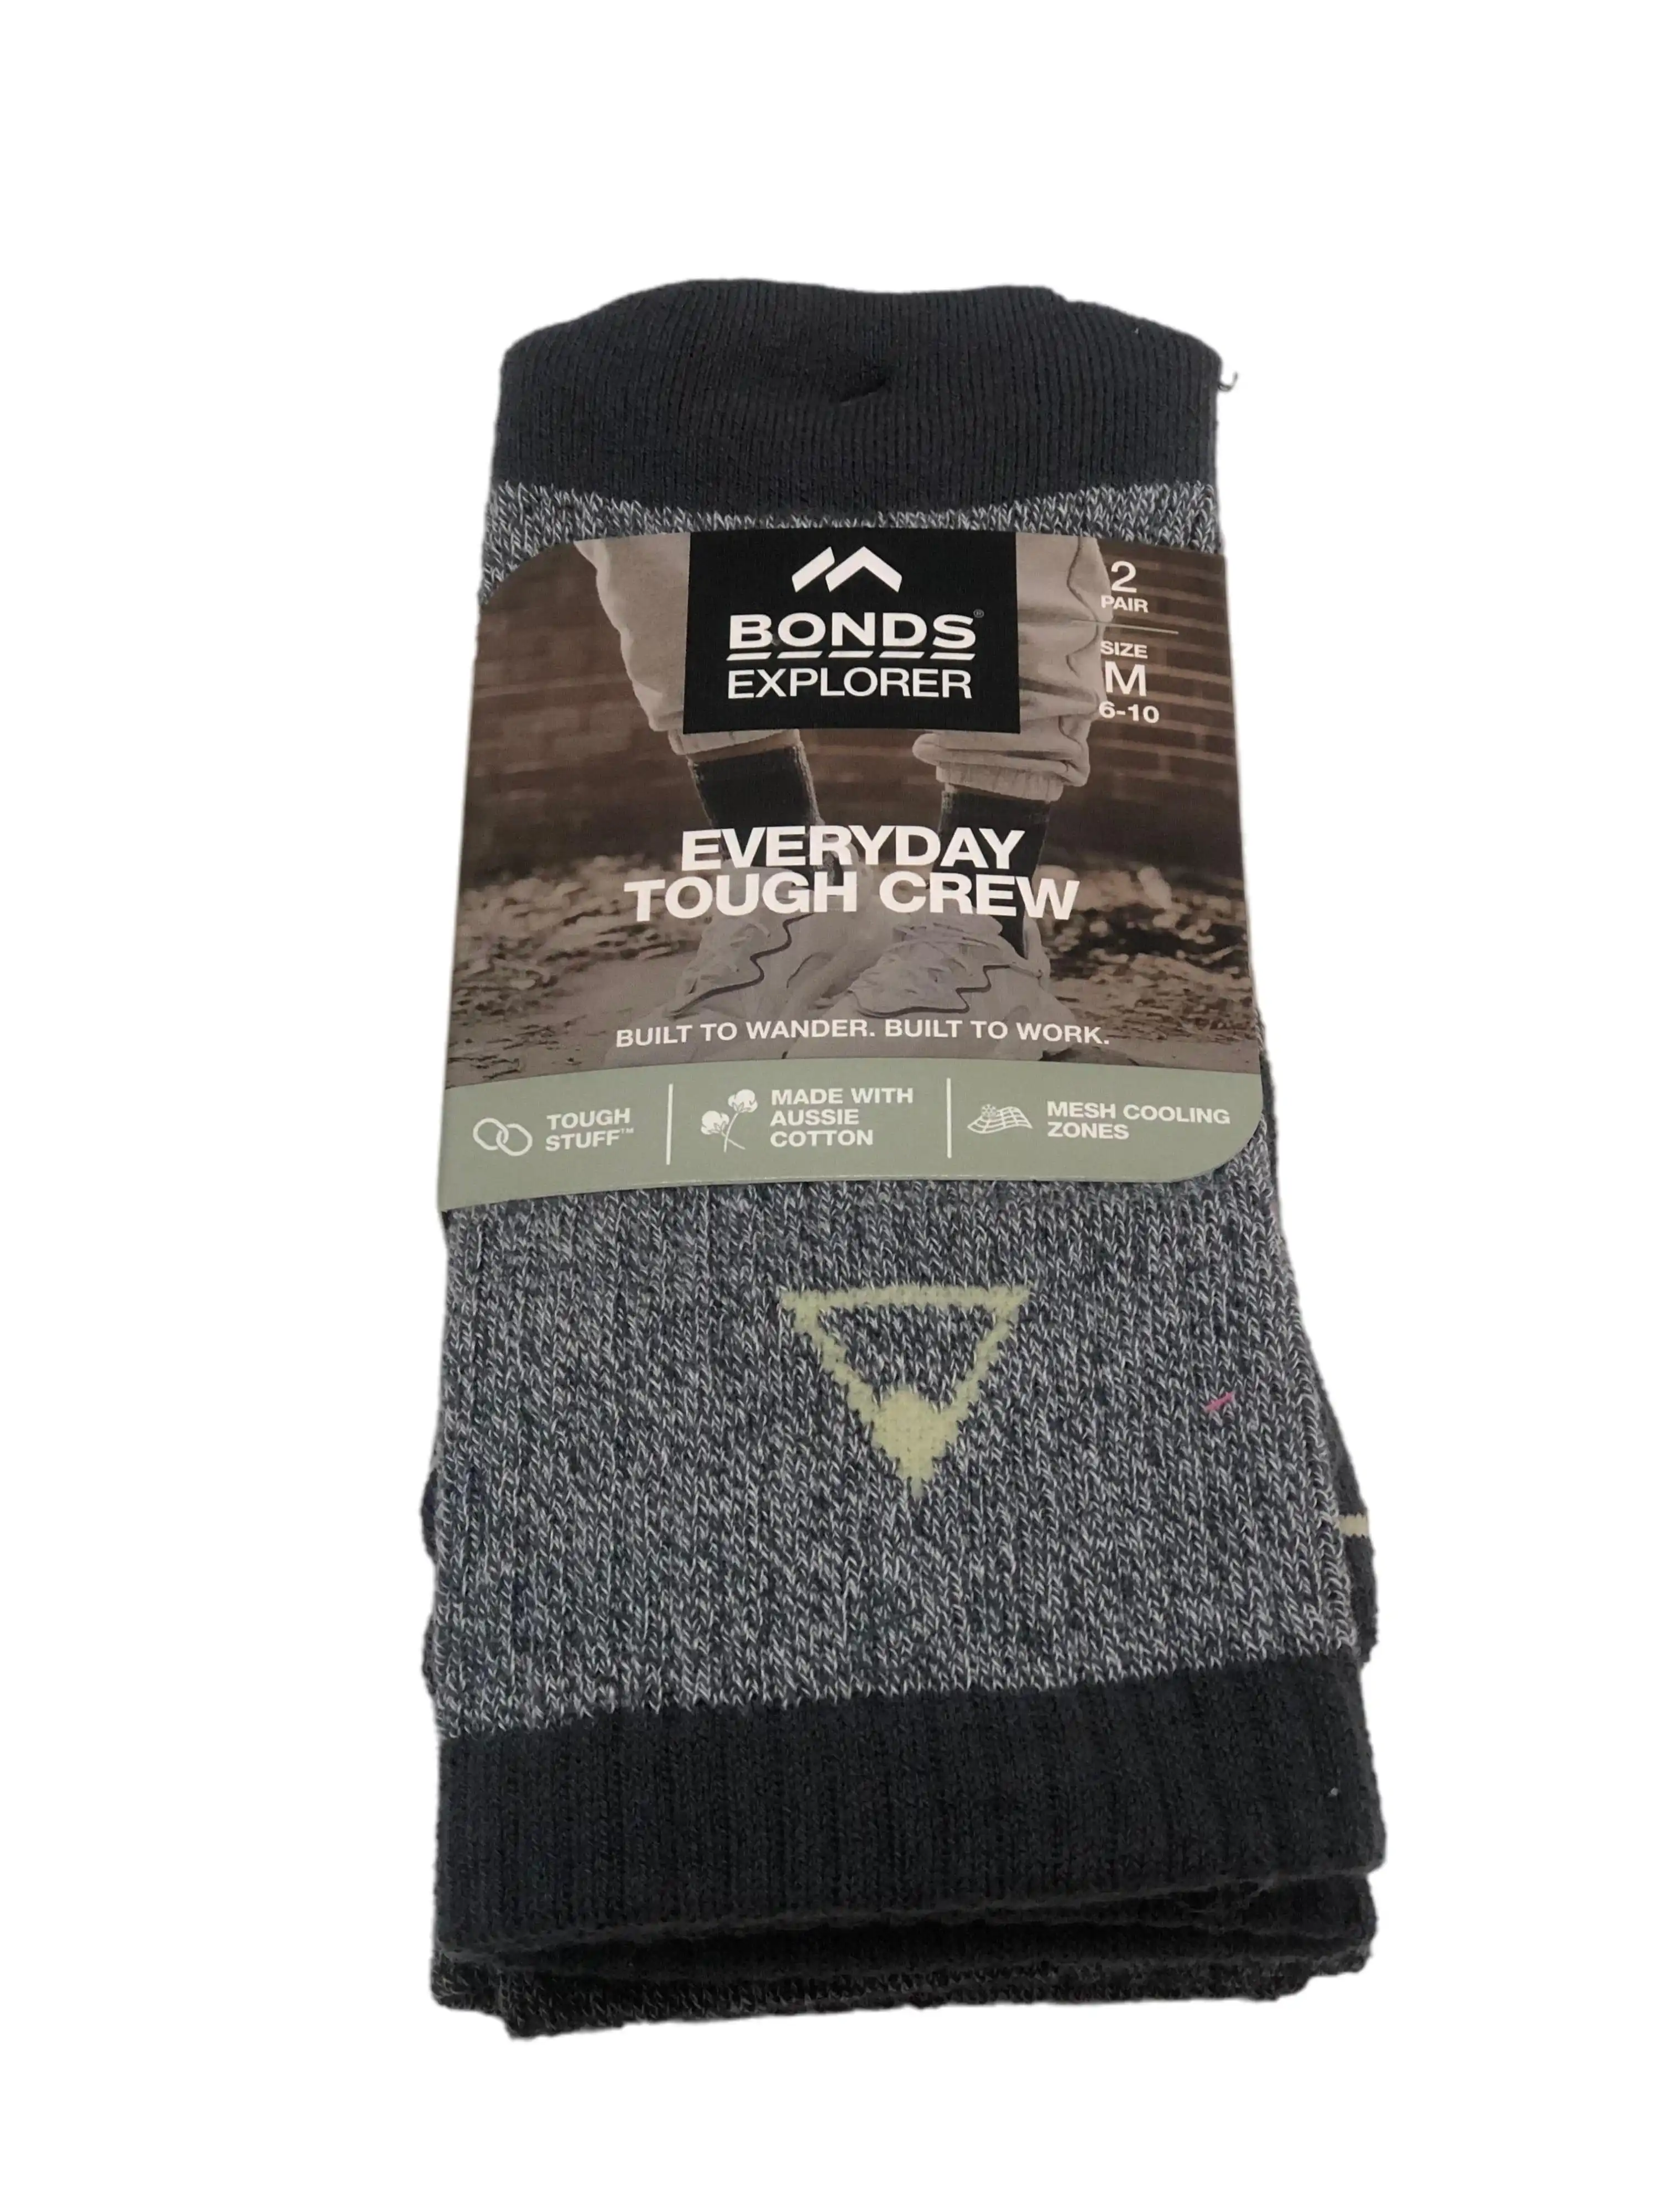 4 x Bonds Explorer Everyday Tough Crew Cotton Blend Socks - Grey 09K Print